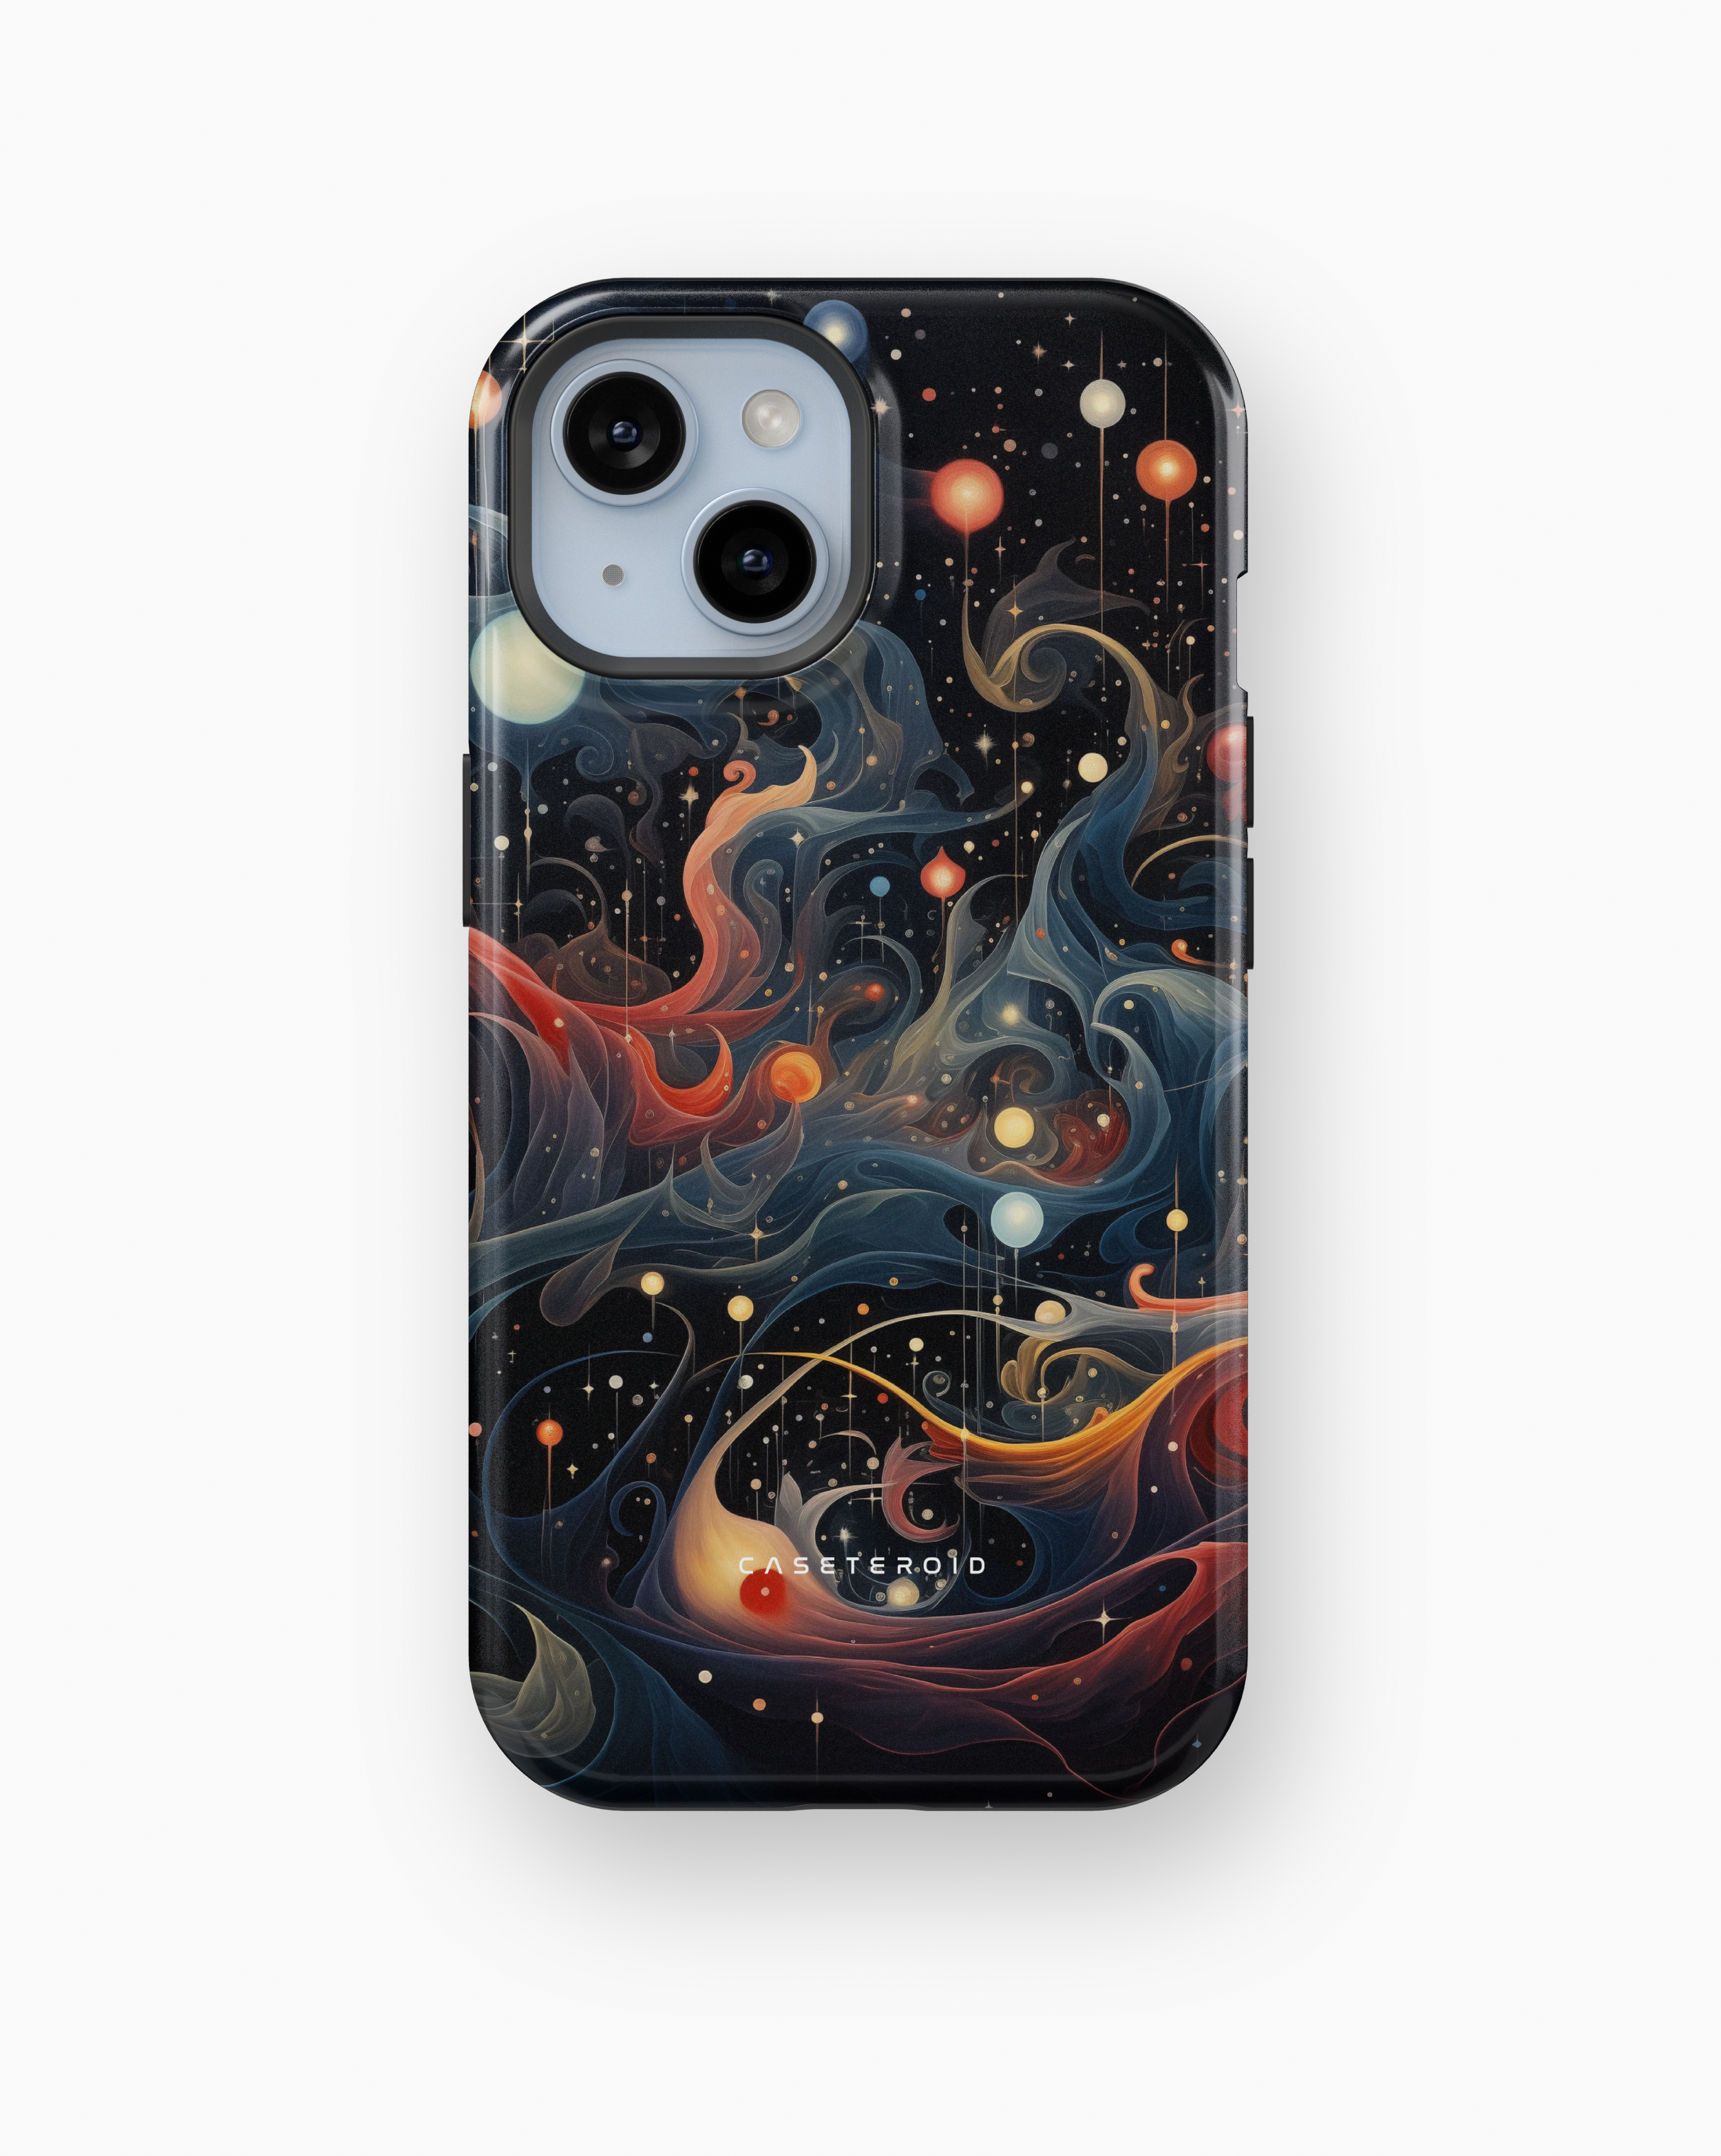 iPhone Tough Case - Nebula Sonata - CASETEROID